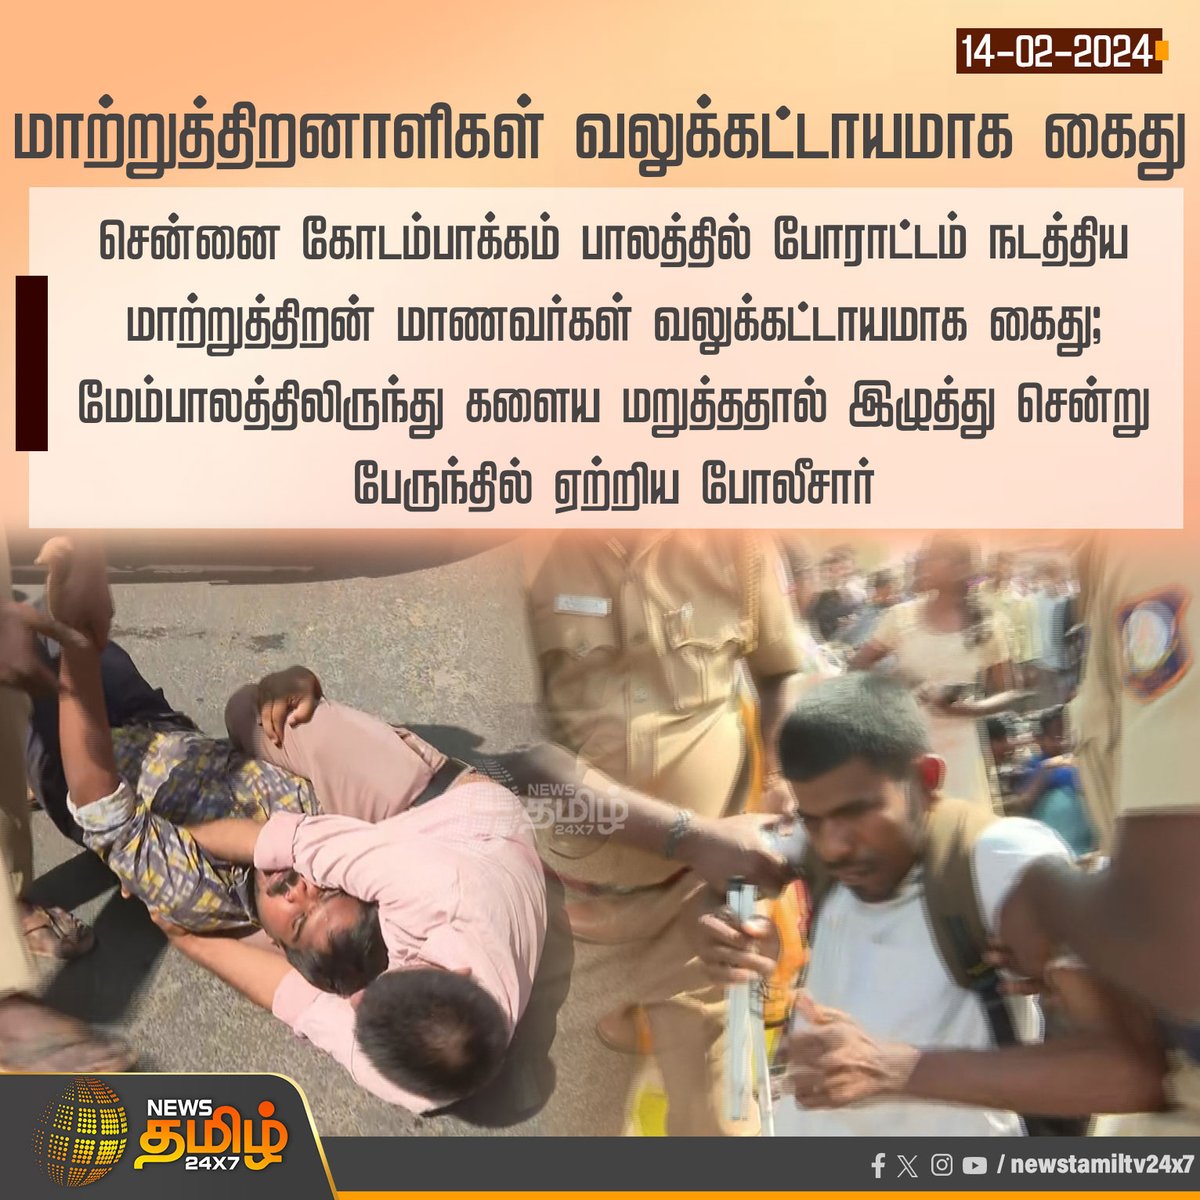 #NewsUpdate | மாற்றுத்திறனாளிகள் வலுக்கட்டாயமாக கைது

#Chennai | #Kodambakkam | #Physicallychallenged | #Police | #NewsTamil24x7